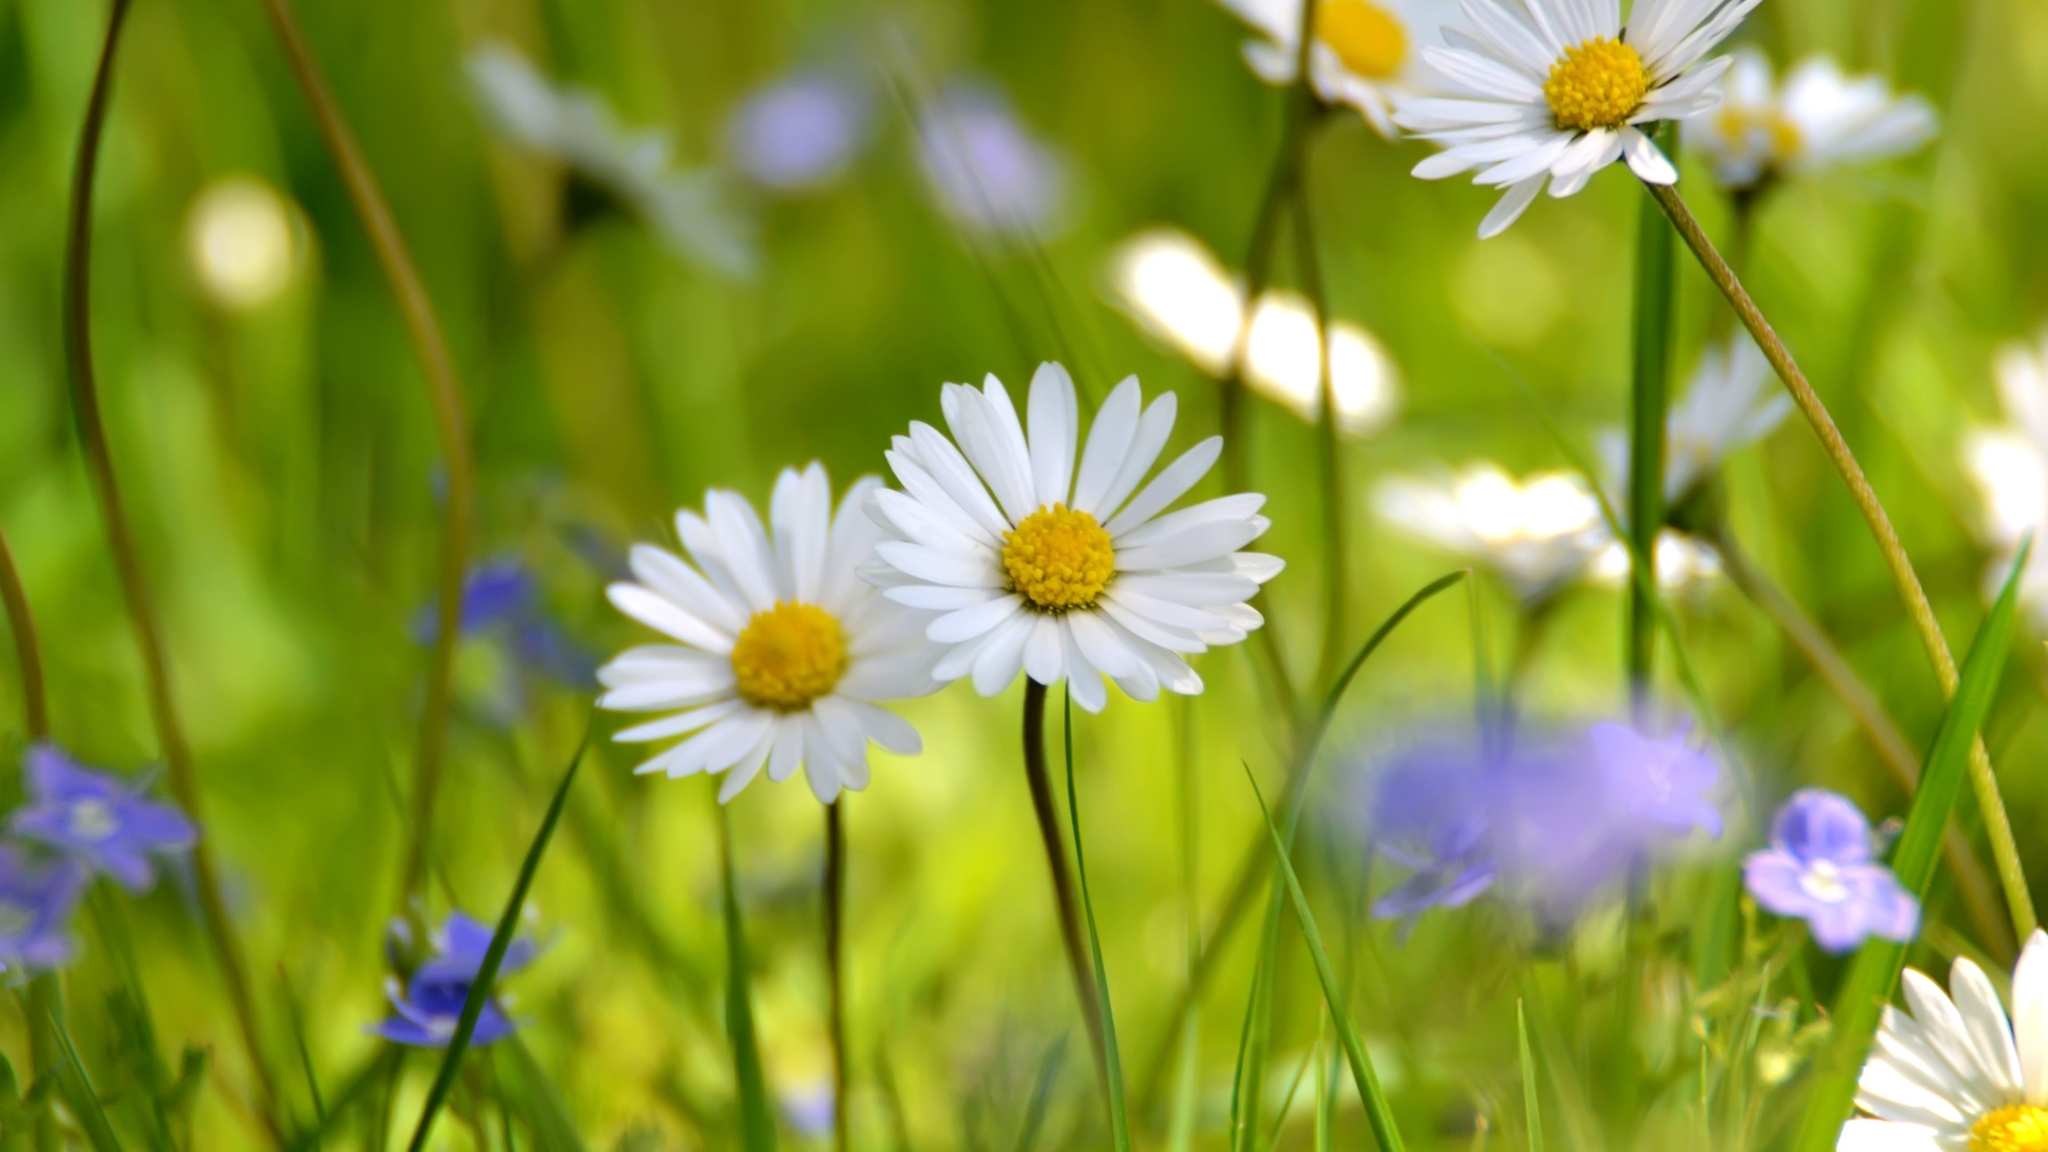 Image: Summer, daisies, field, meadow, grass